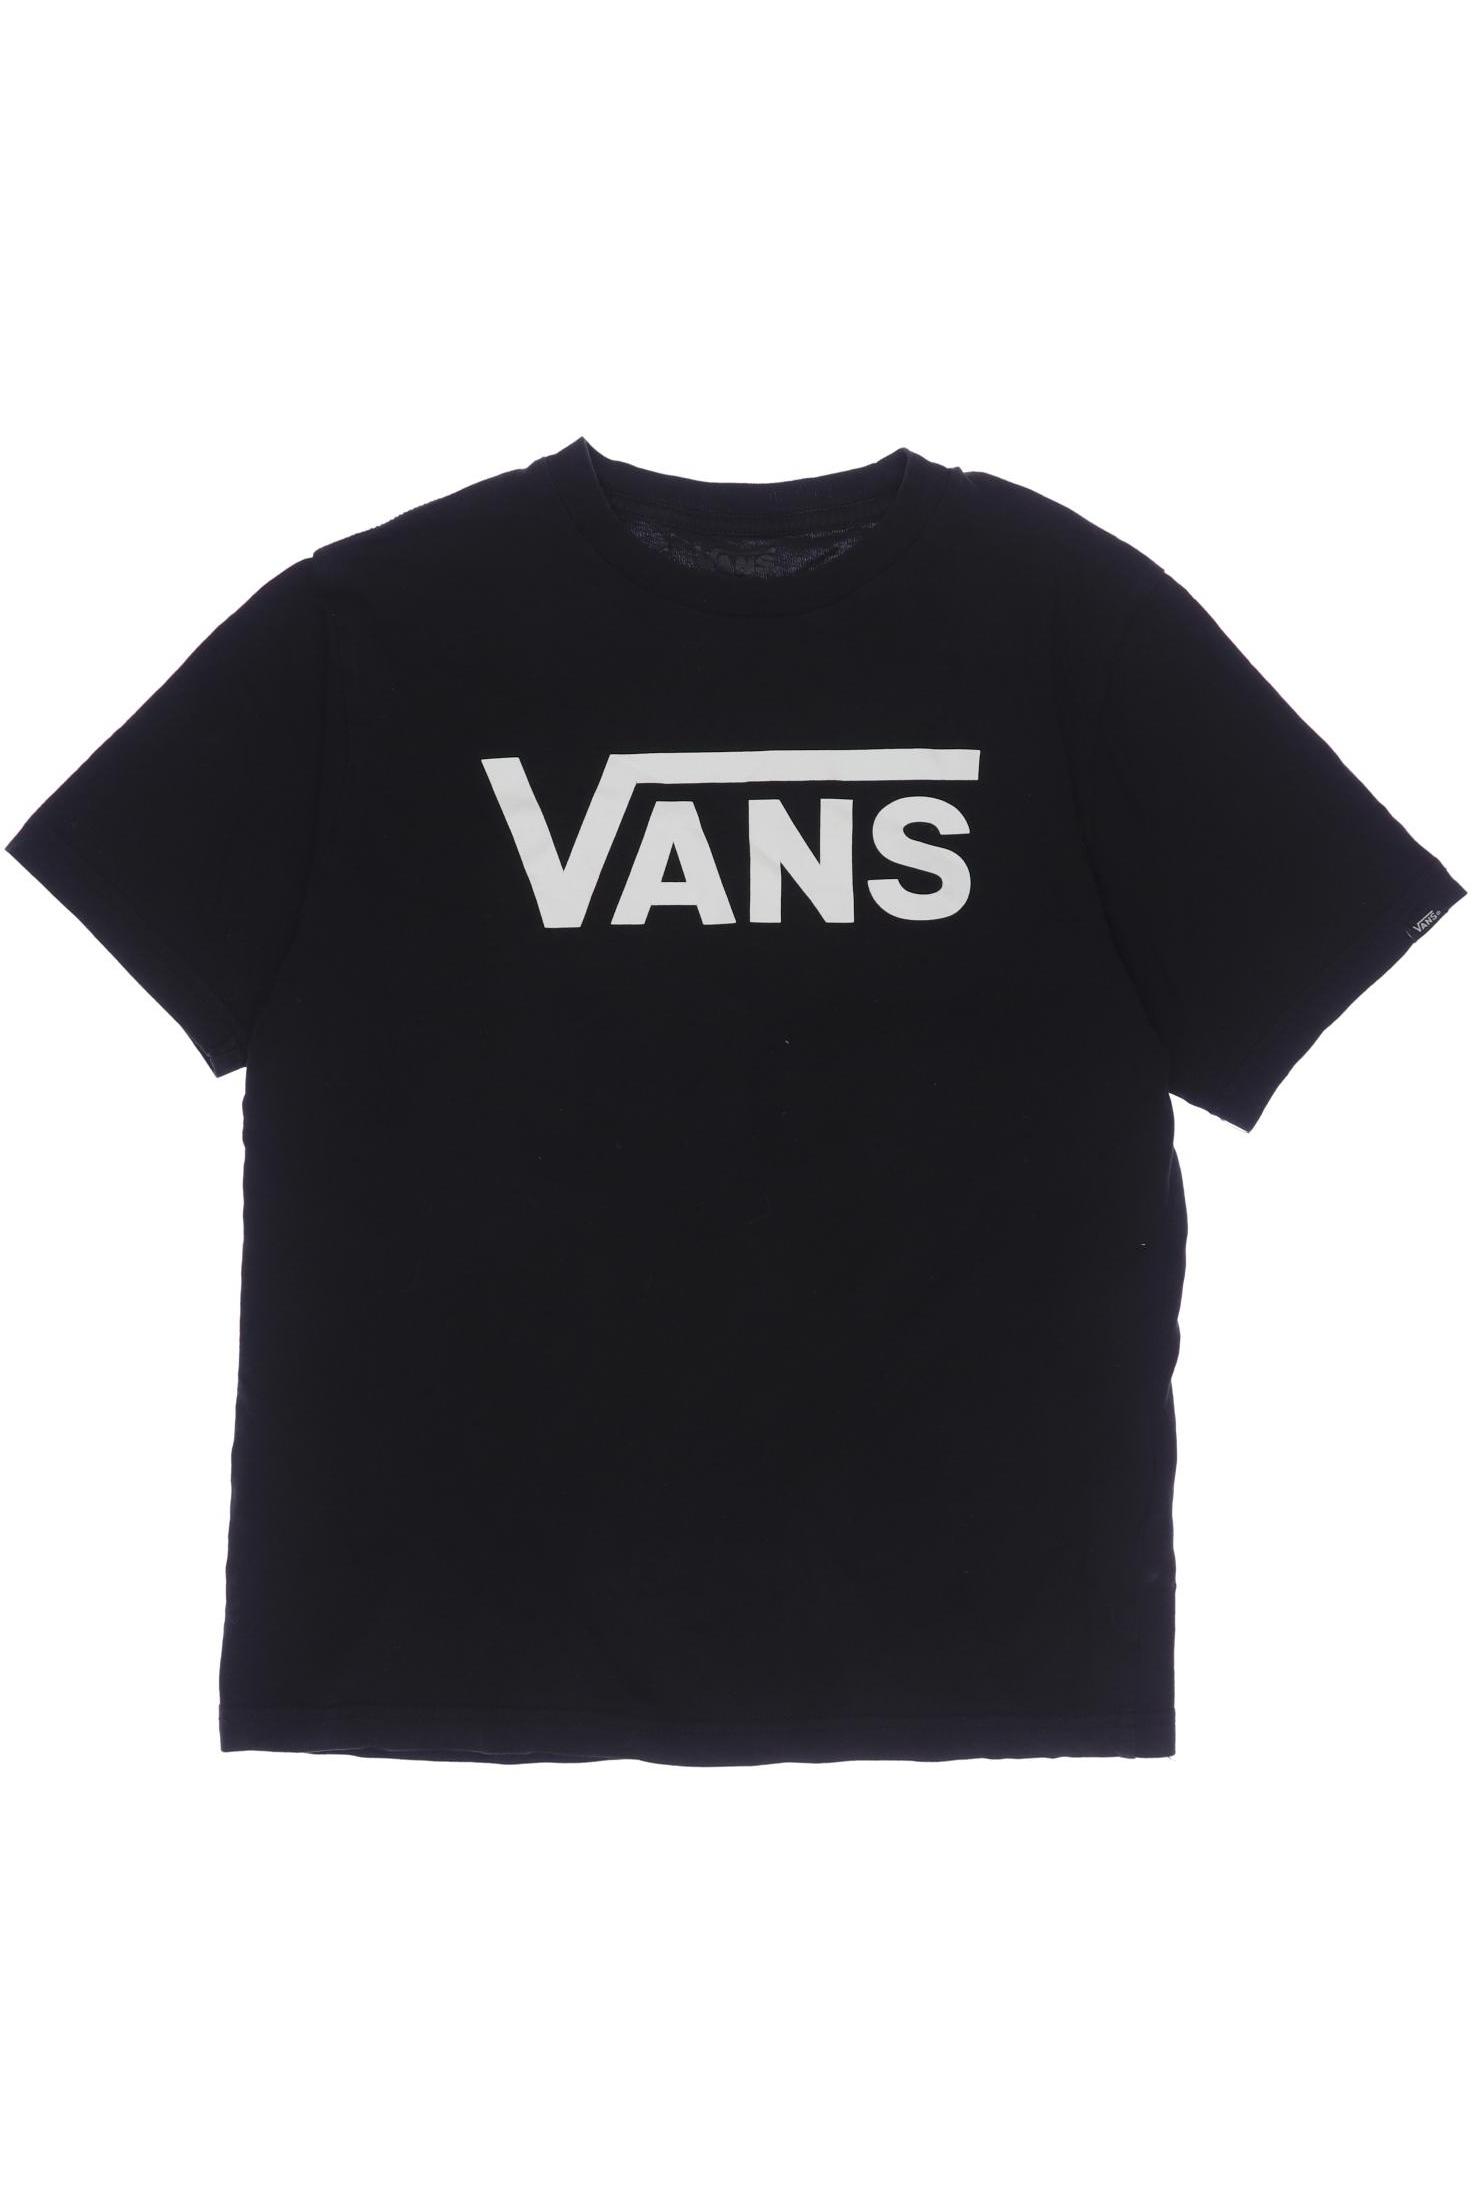 VANS Jungen T-Shirt, schwarz von Vans